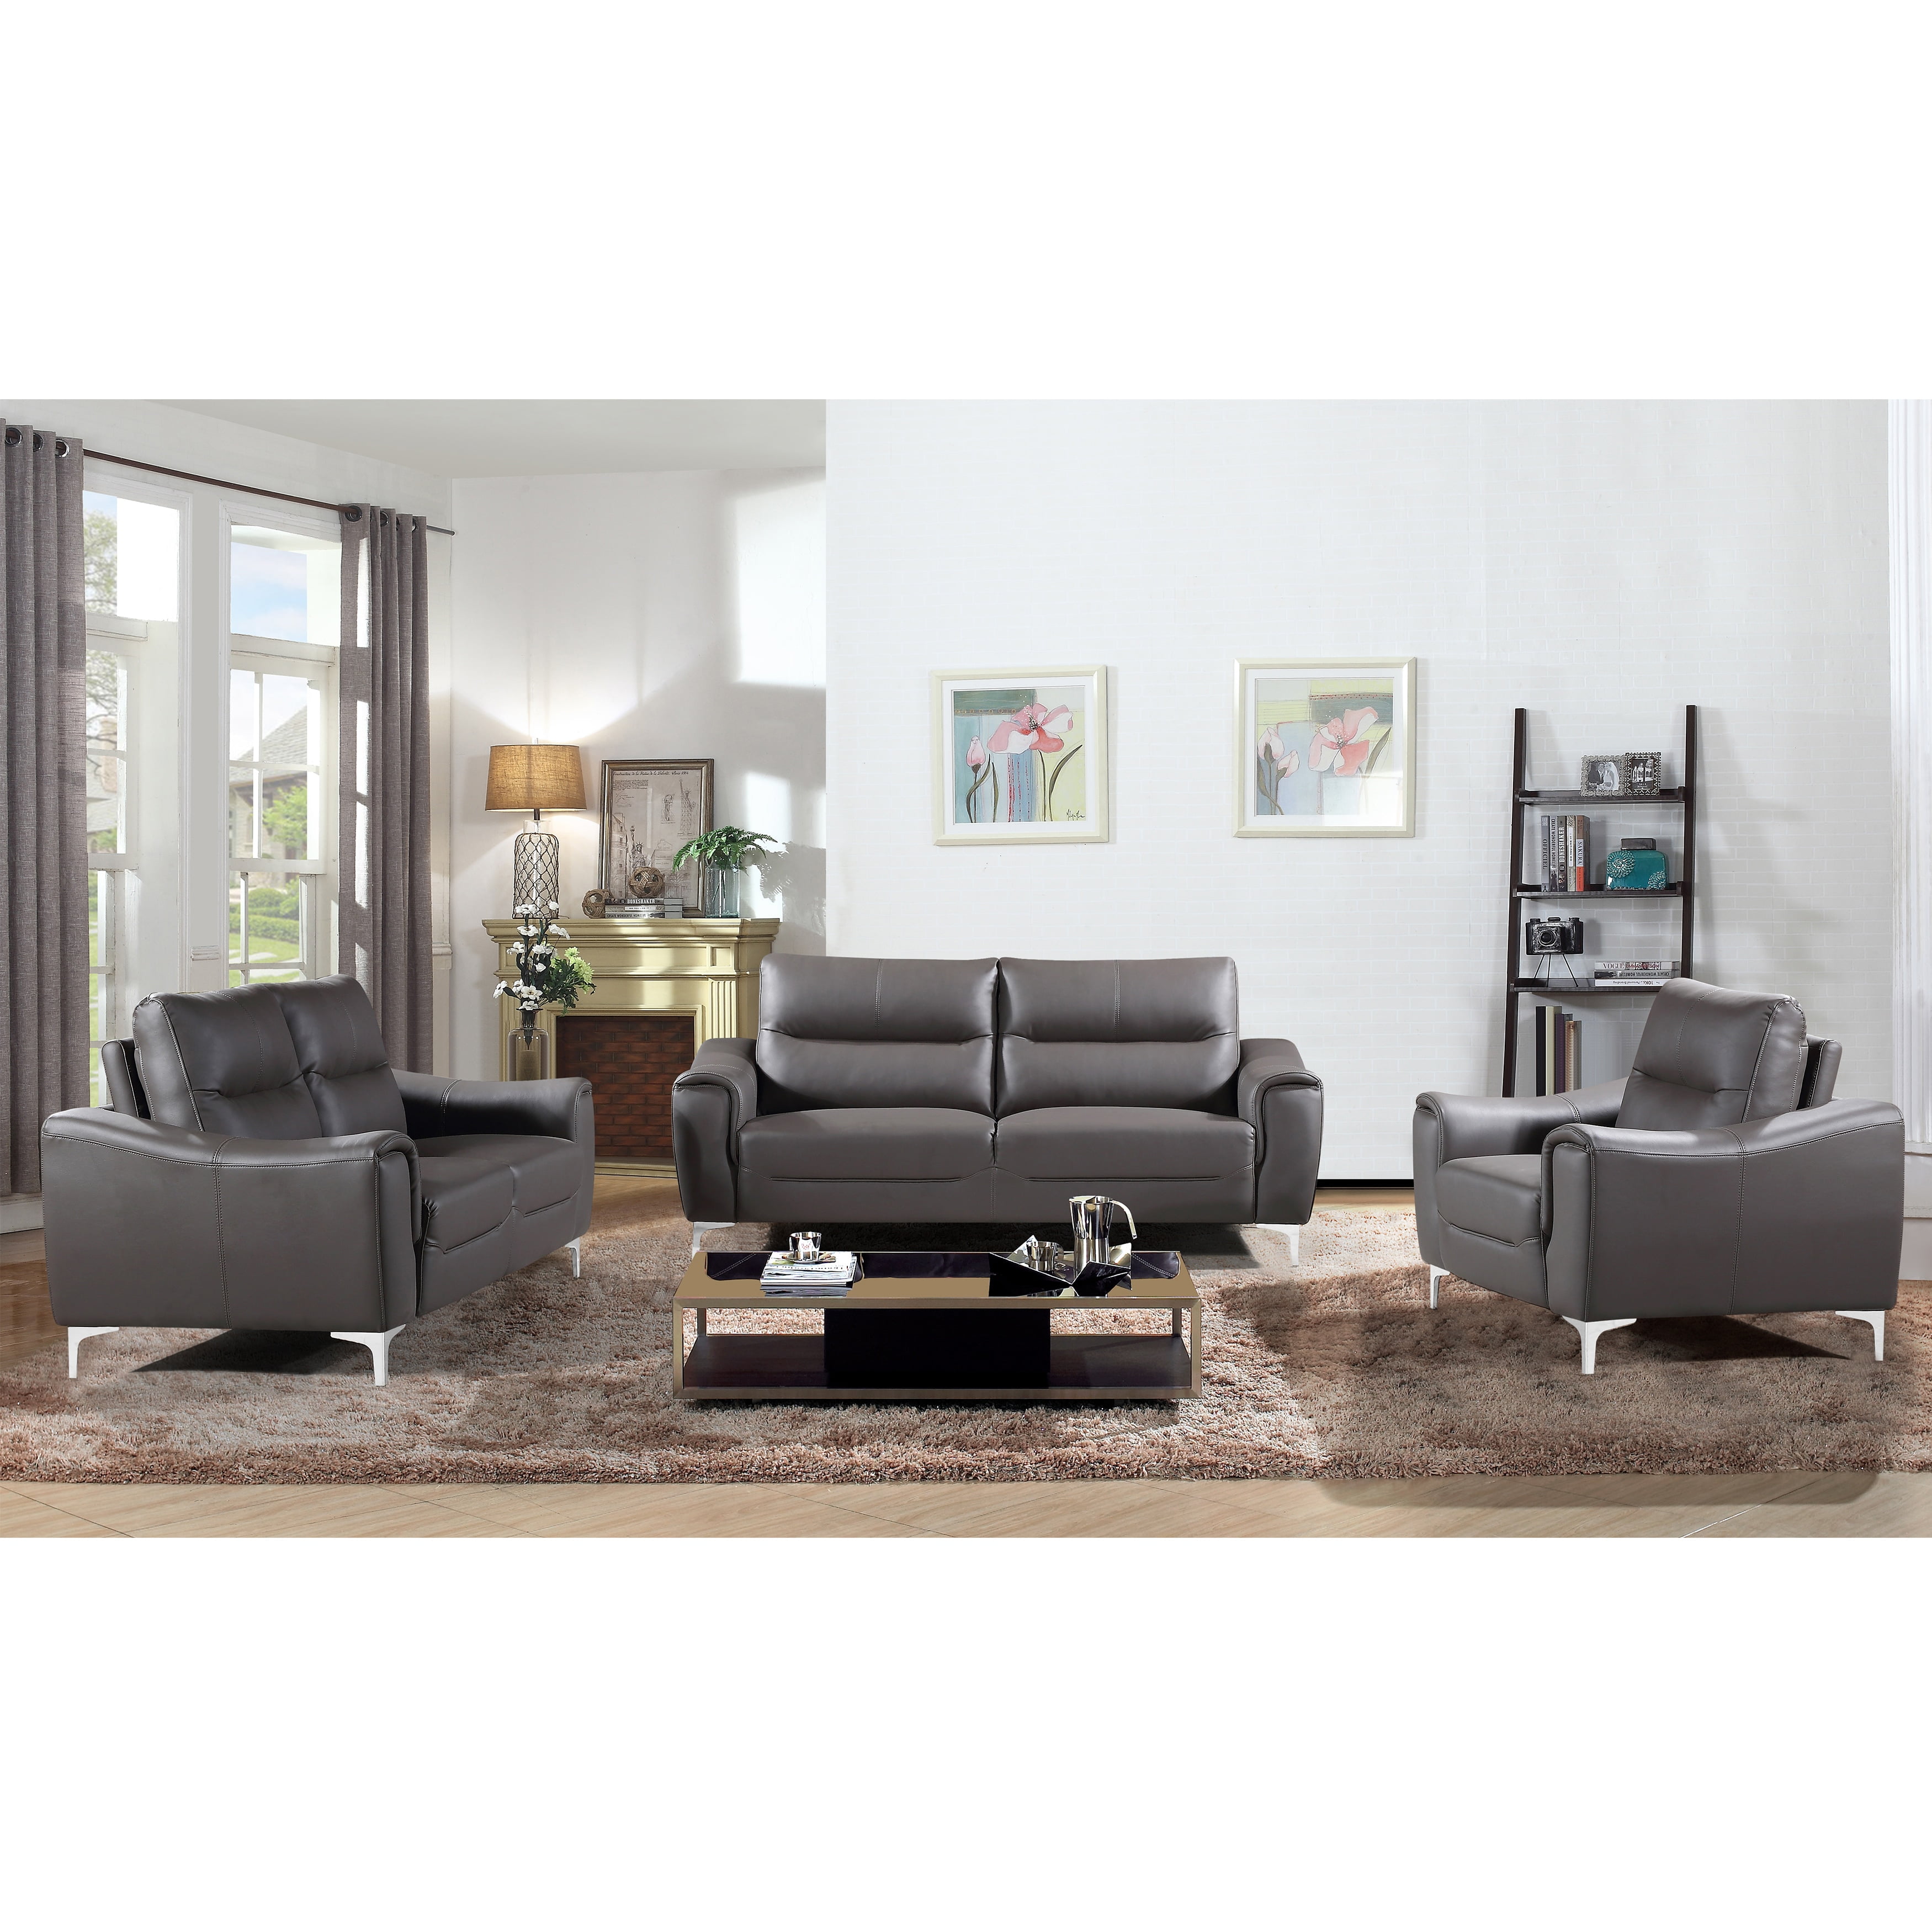 AC Pacific Rachel Collection Modern Style Grey Leather Complete 3 Piece Living Room Sofa Set Walmartcom Walmartcom